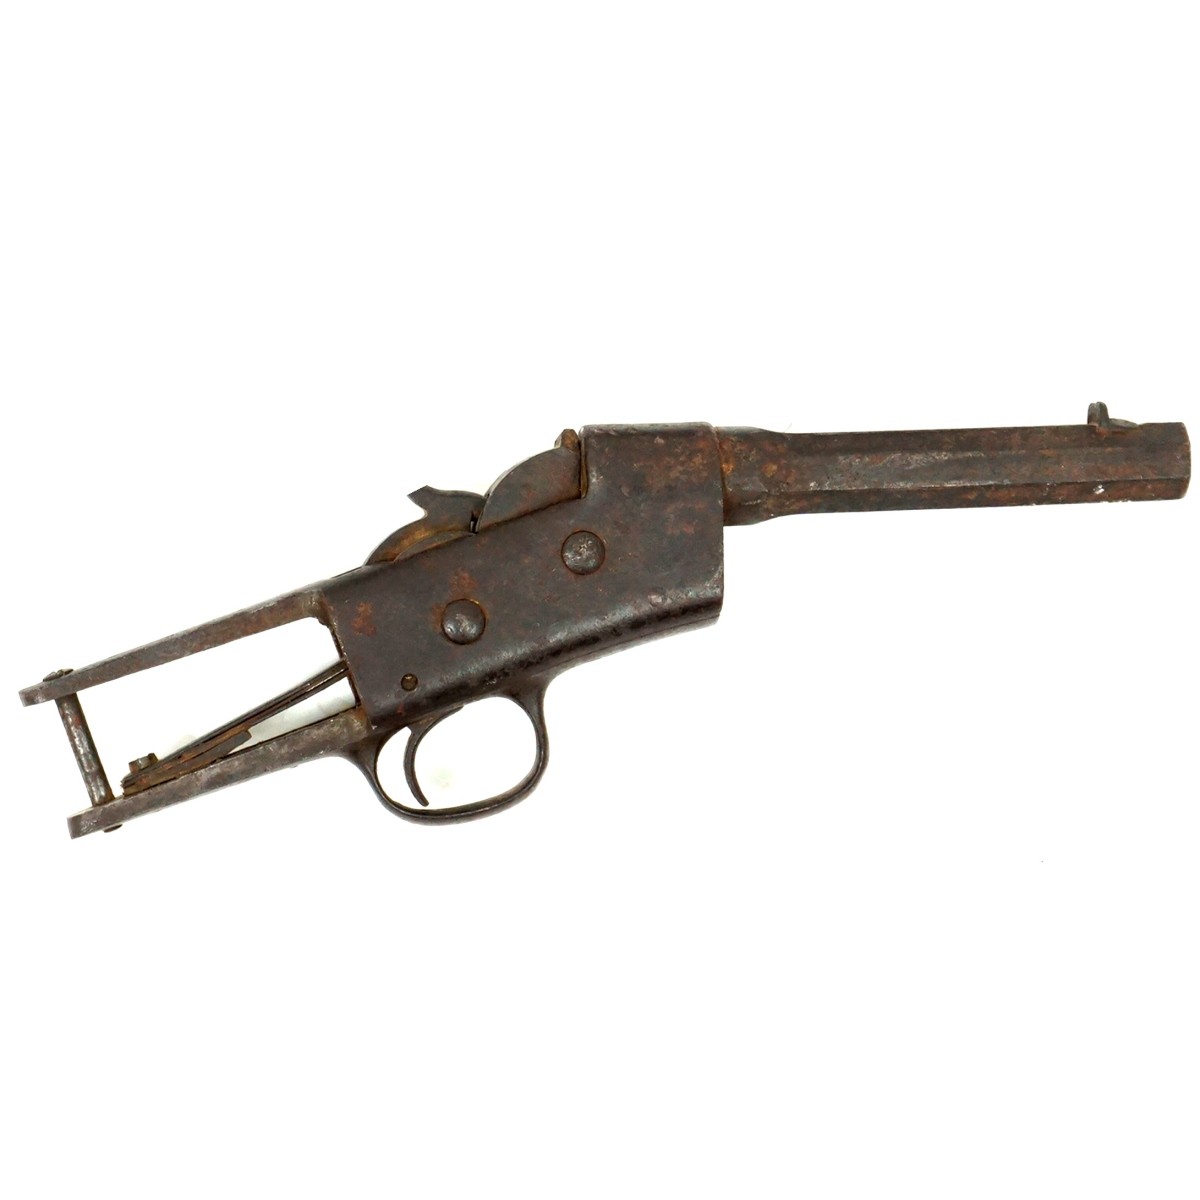 Antique Style Pistols